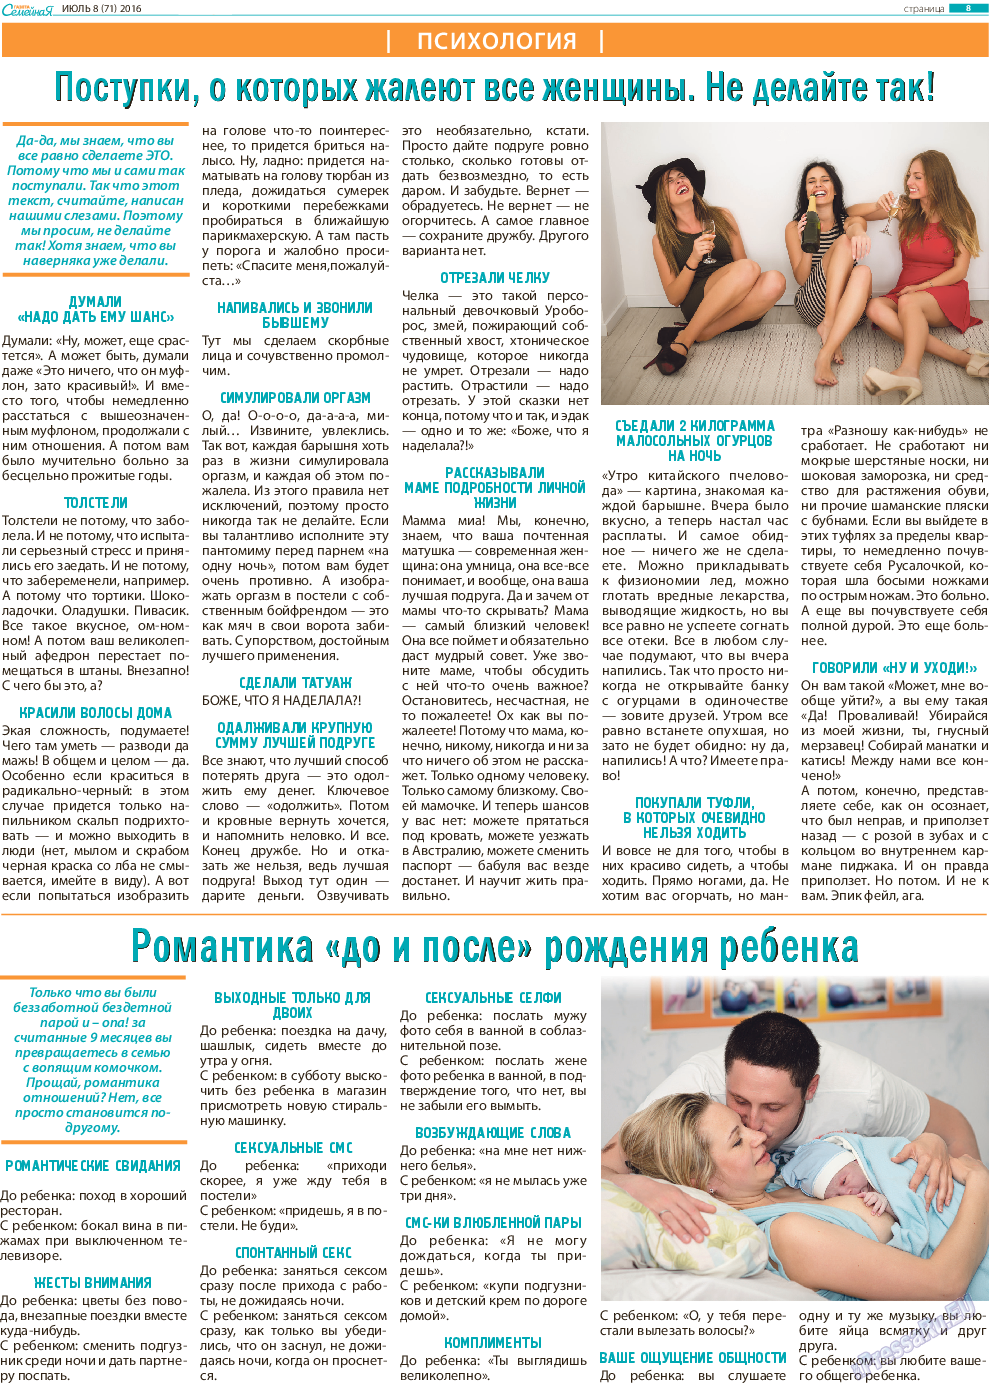 Семейная газета, газета. 2016 №8 стр.8